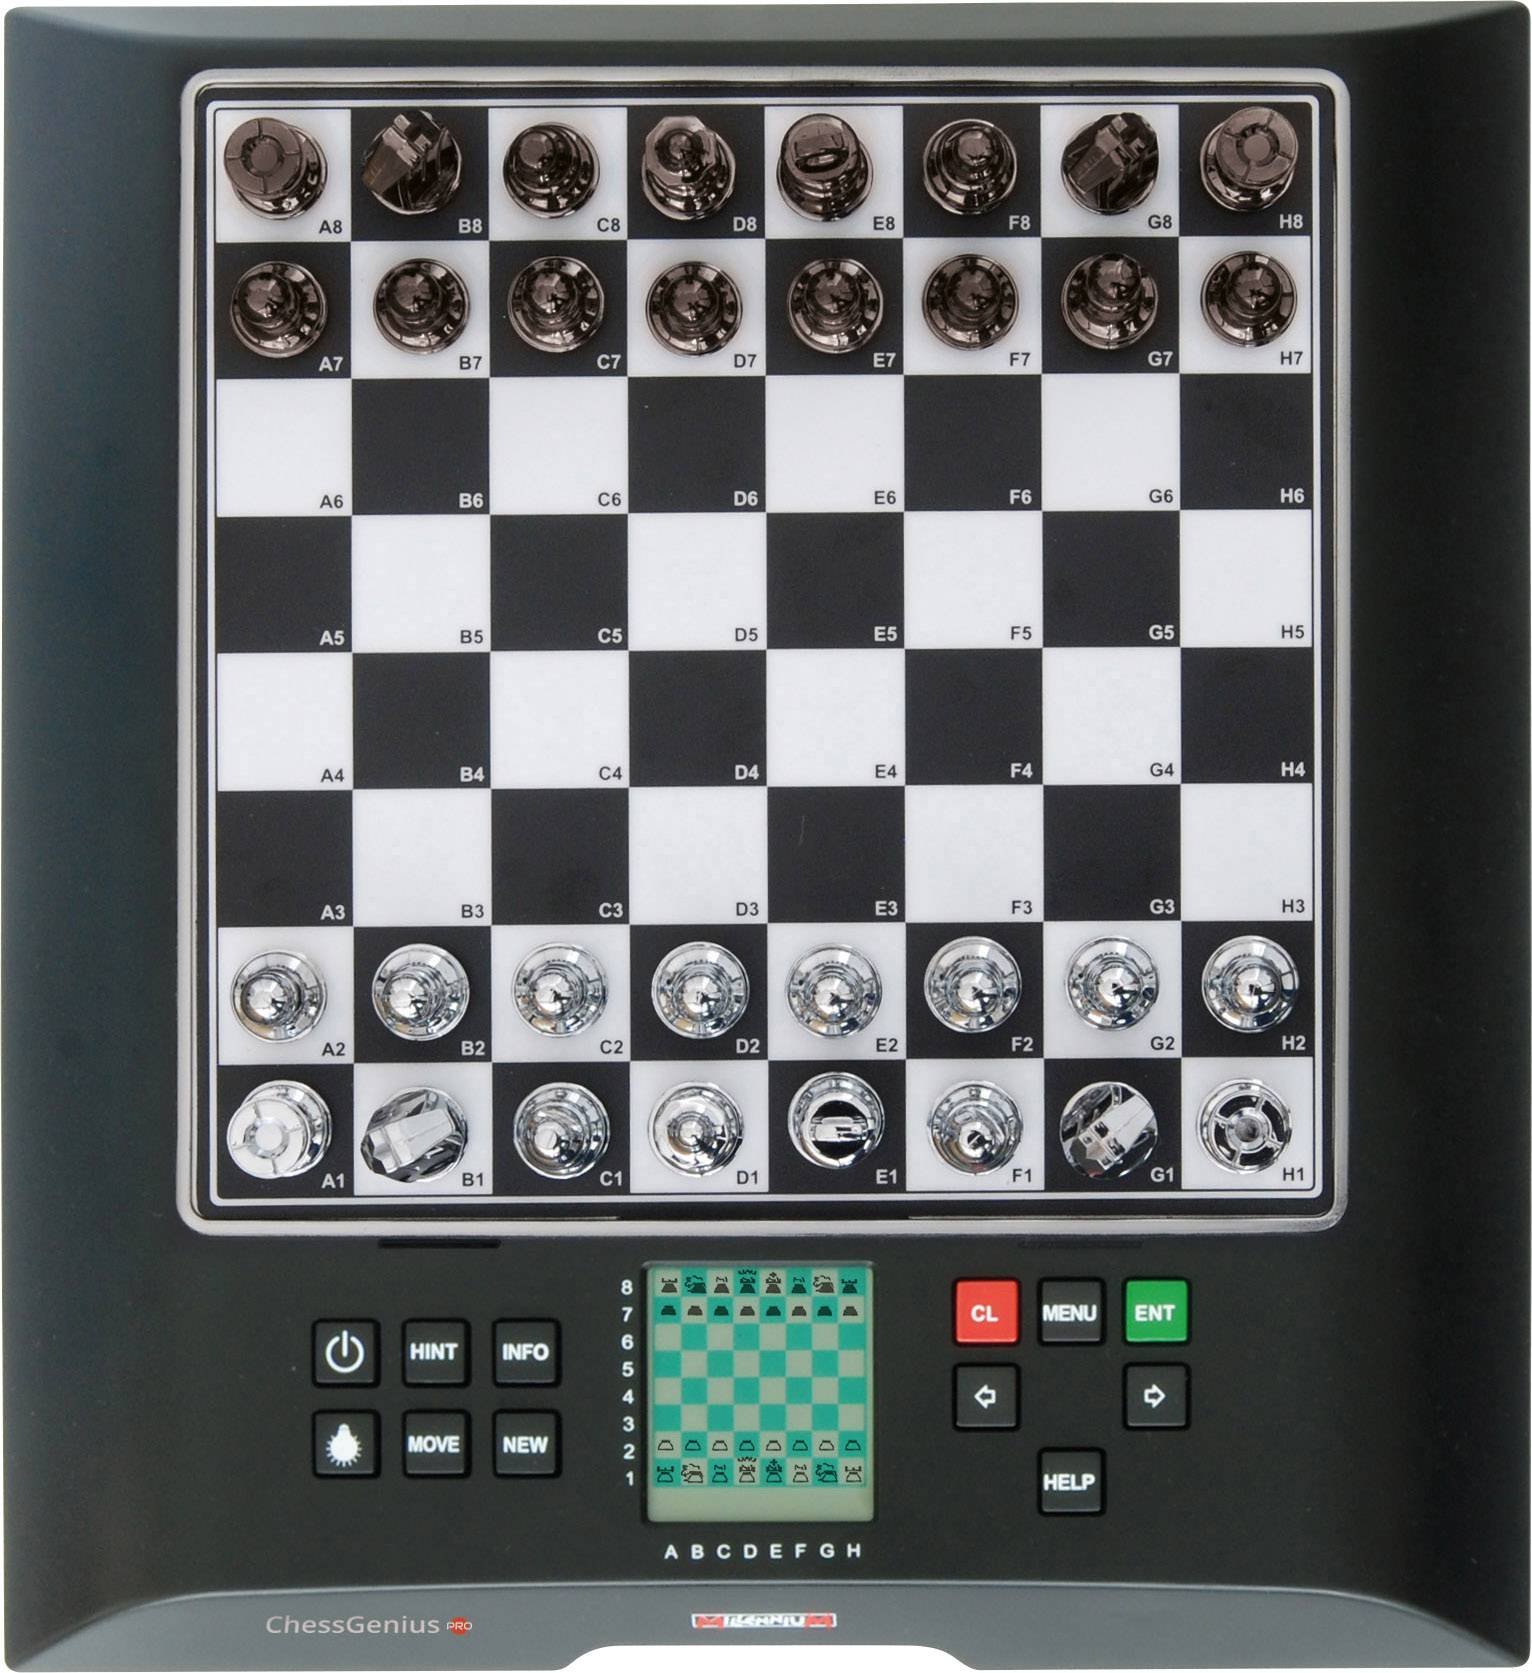 Millennium Chess Genius Pro Chess computer